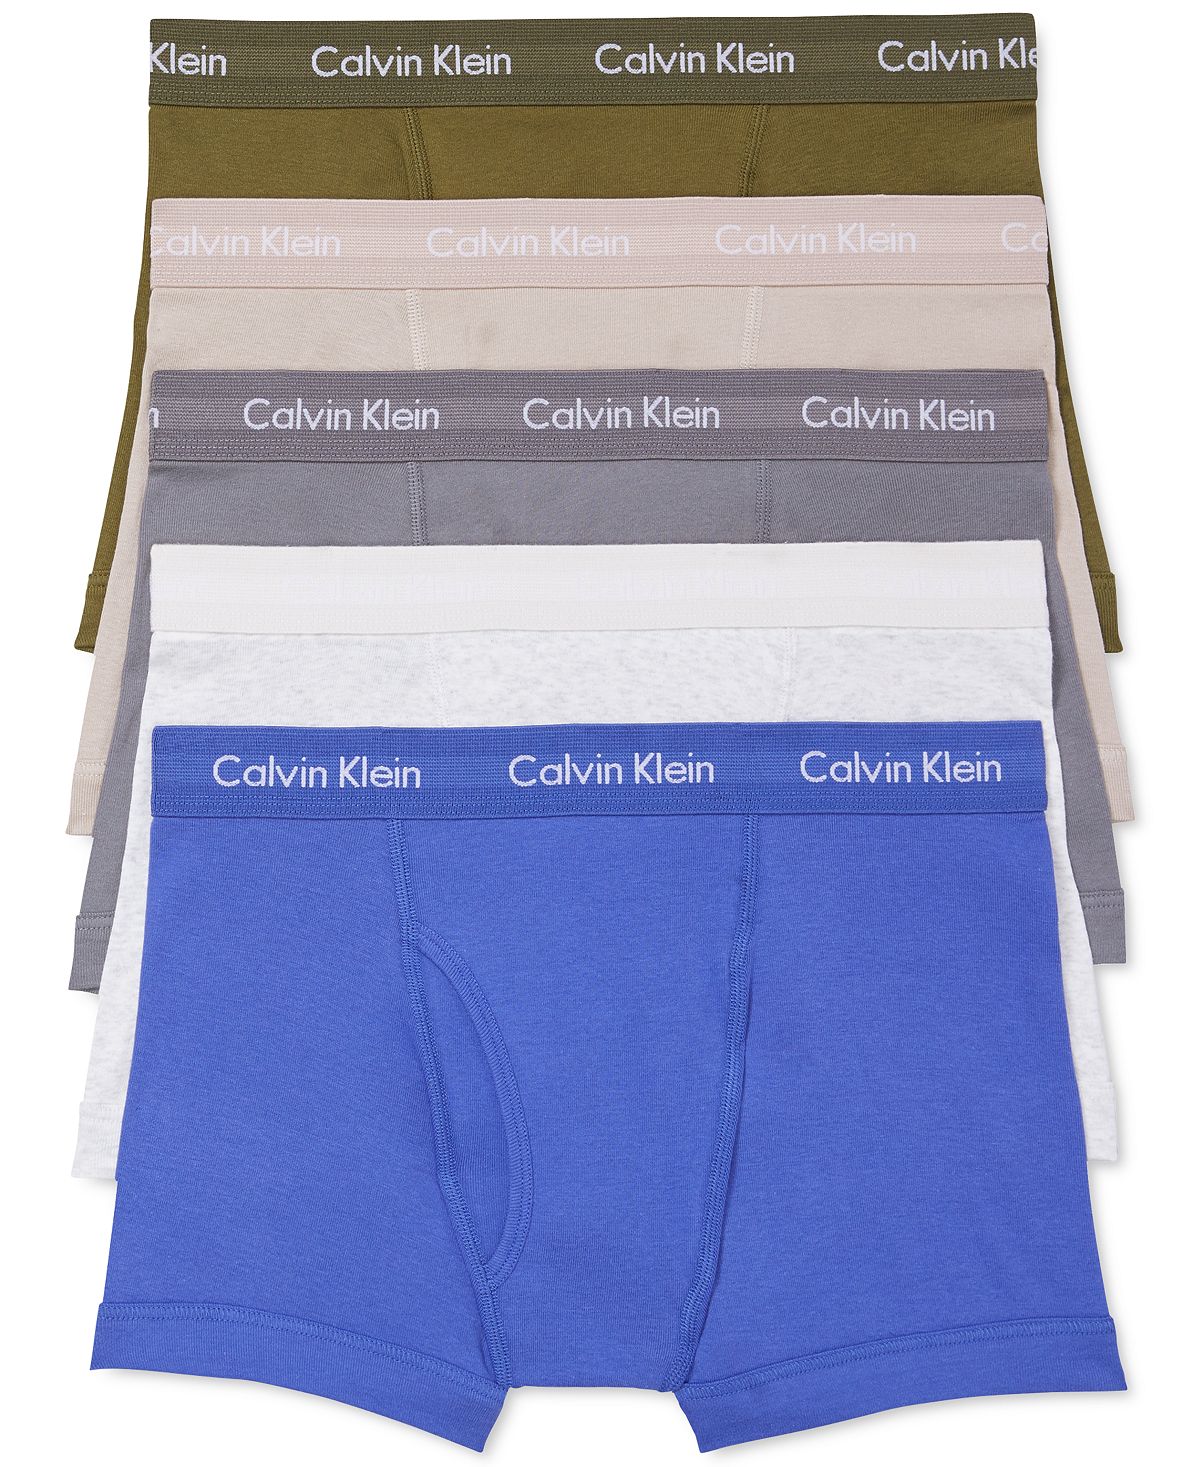 Calvin Klein 5-pk. Cotton Classics Trunks Oxford Assorted